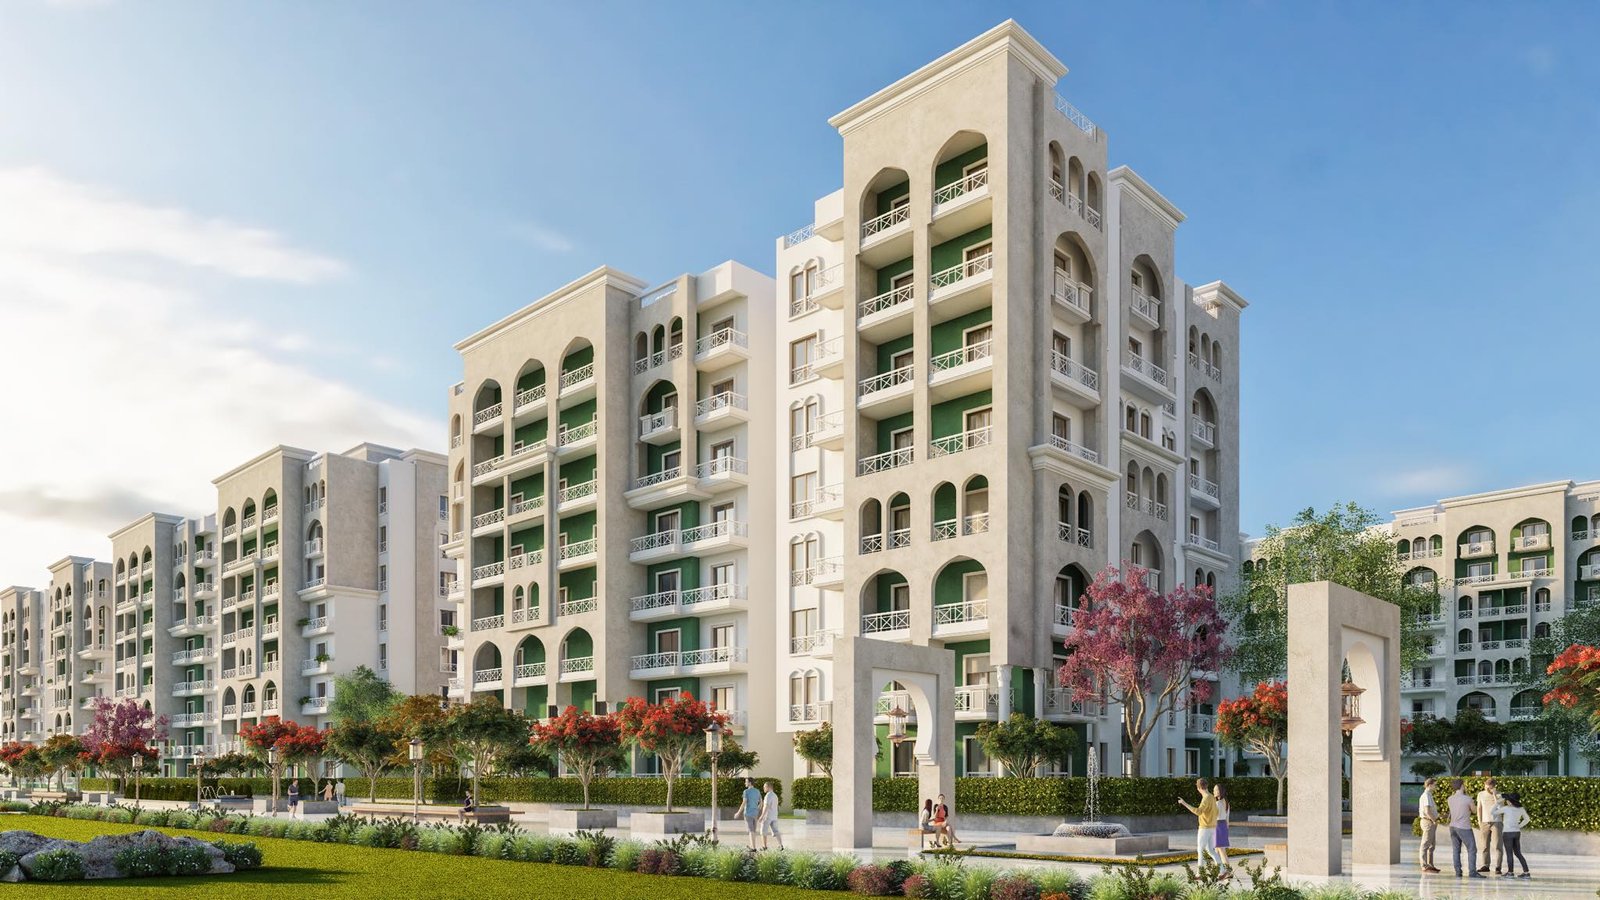 New Garden City شقة للبيع بالعاصمة الإدارية الجديدة مساحة 205متر في كمبوند | THE PEAK PROPERTIES